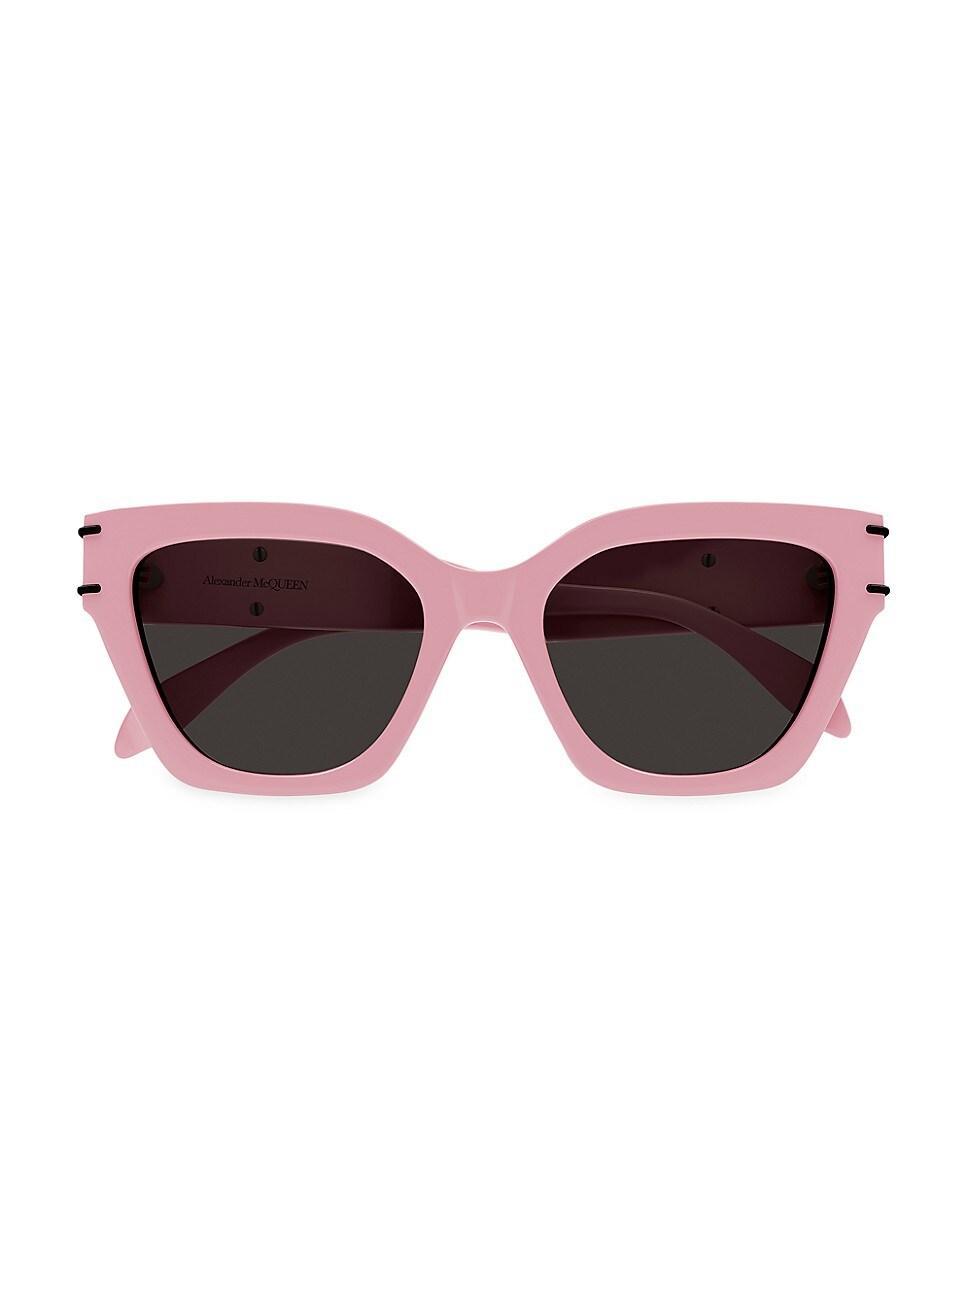 Alexander McQueen 53mm Cat Eye Sunglasses Product Image